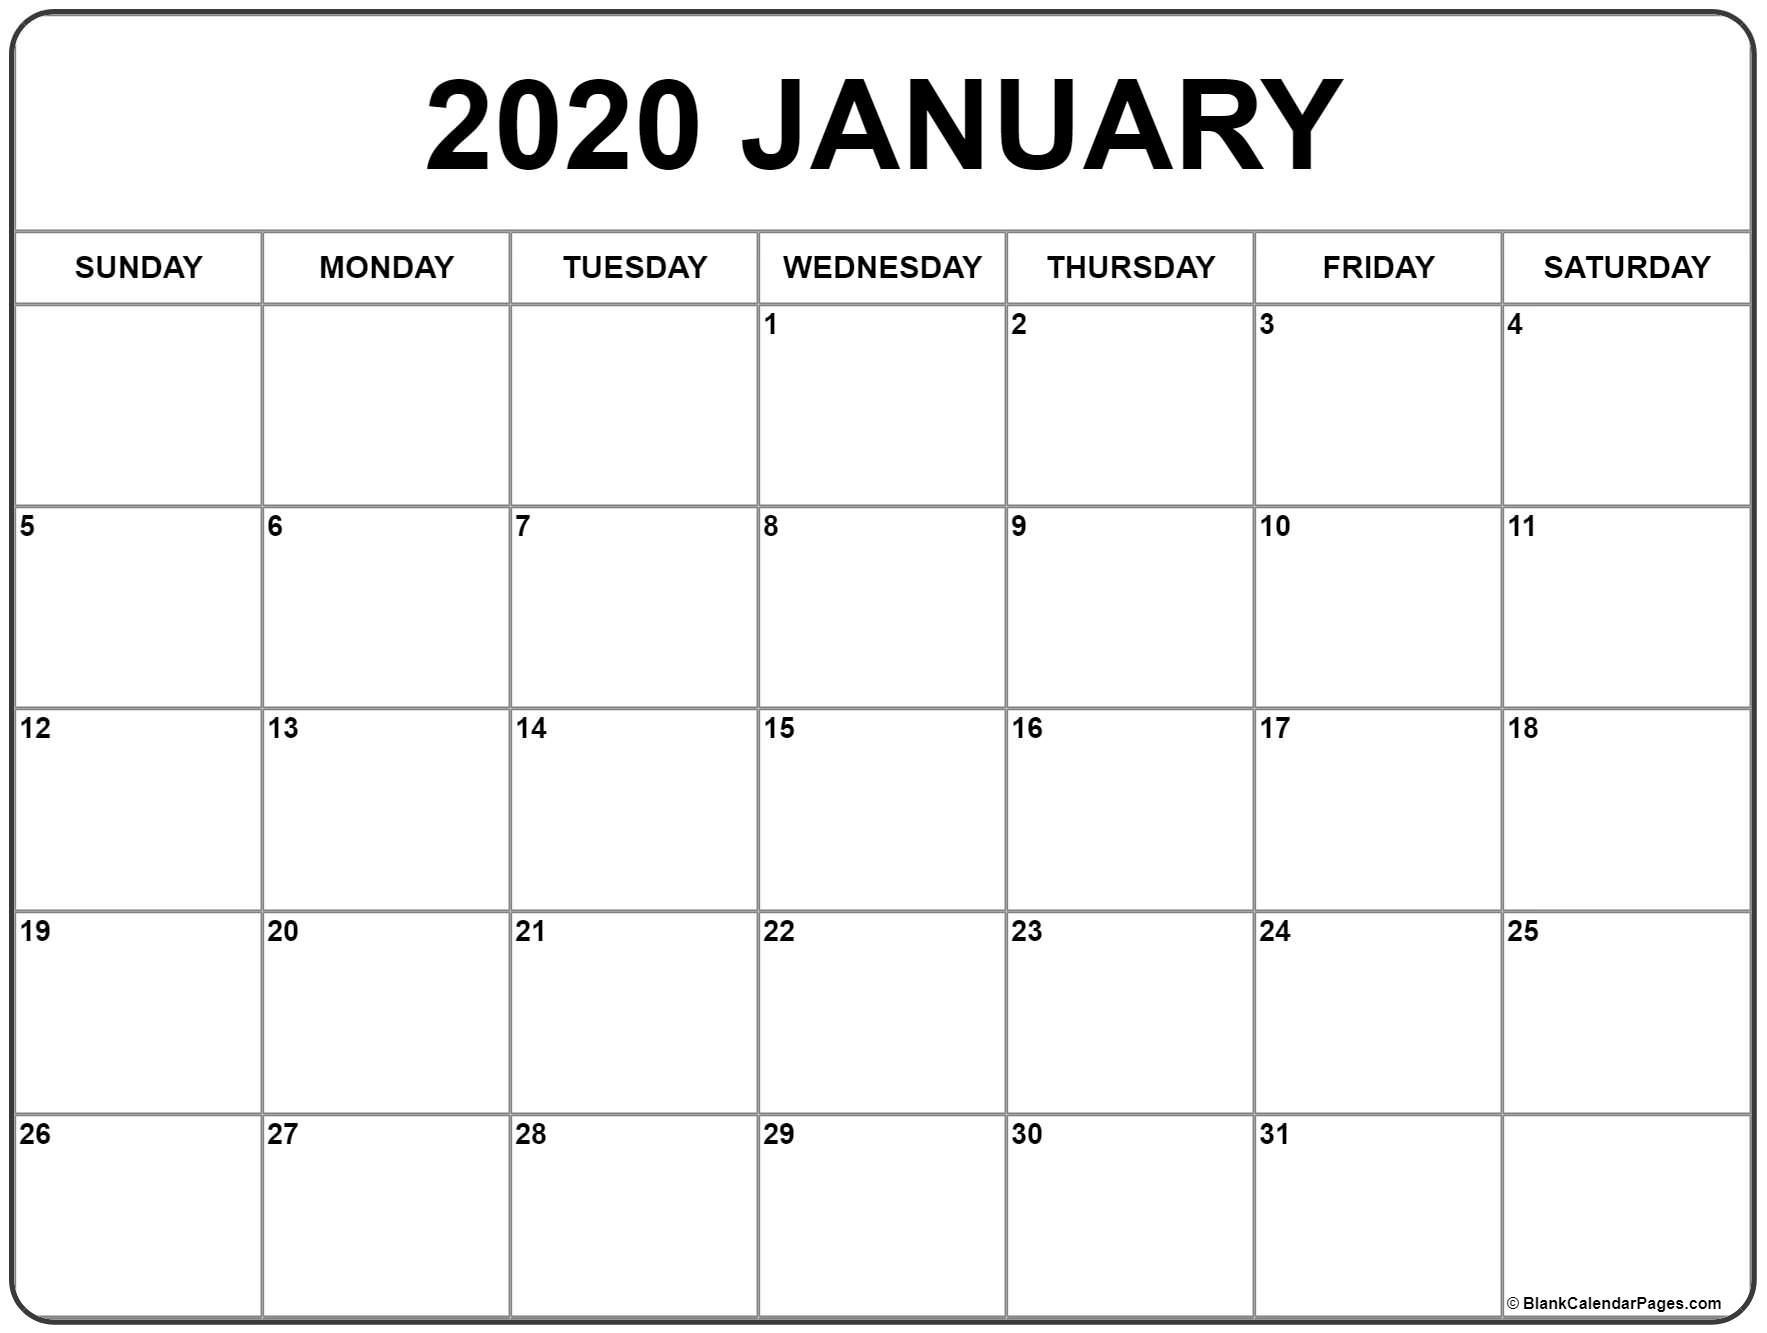 January 2020 Calendar | Free Printable Monthly Calendars-January 2020 Calendar Free Printable